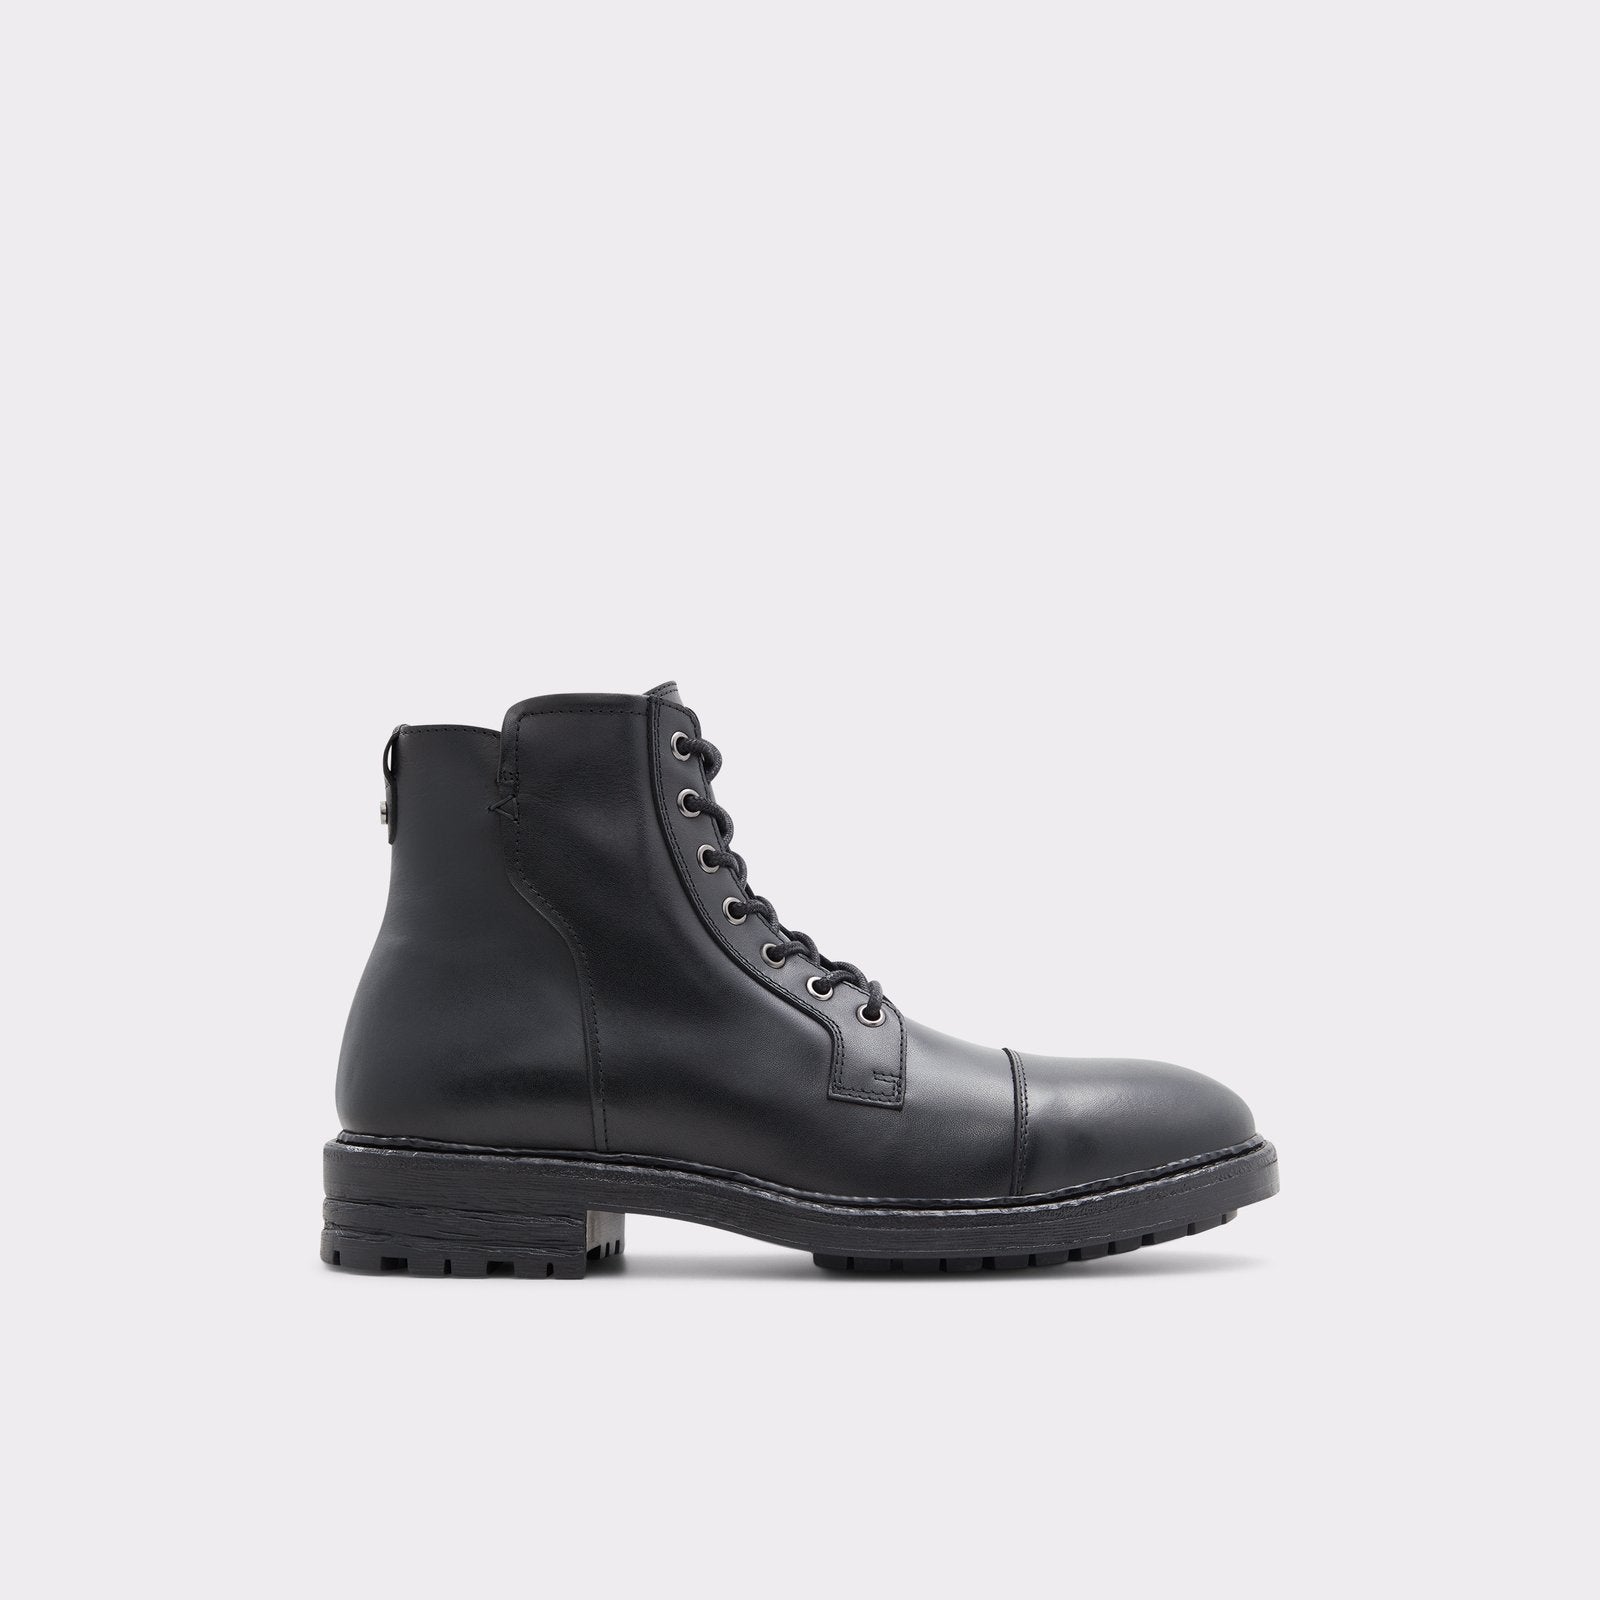 Aldo Men’s Ankle Boots Adrardosien (Black)